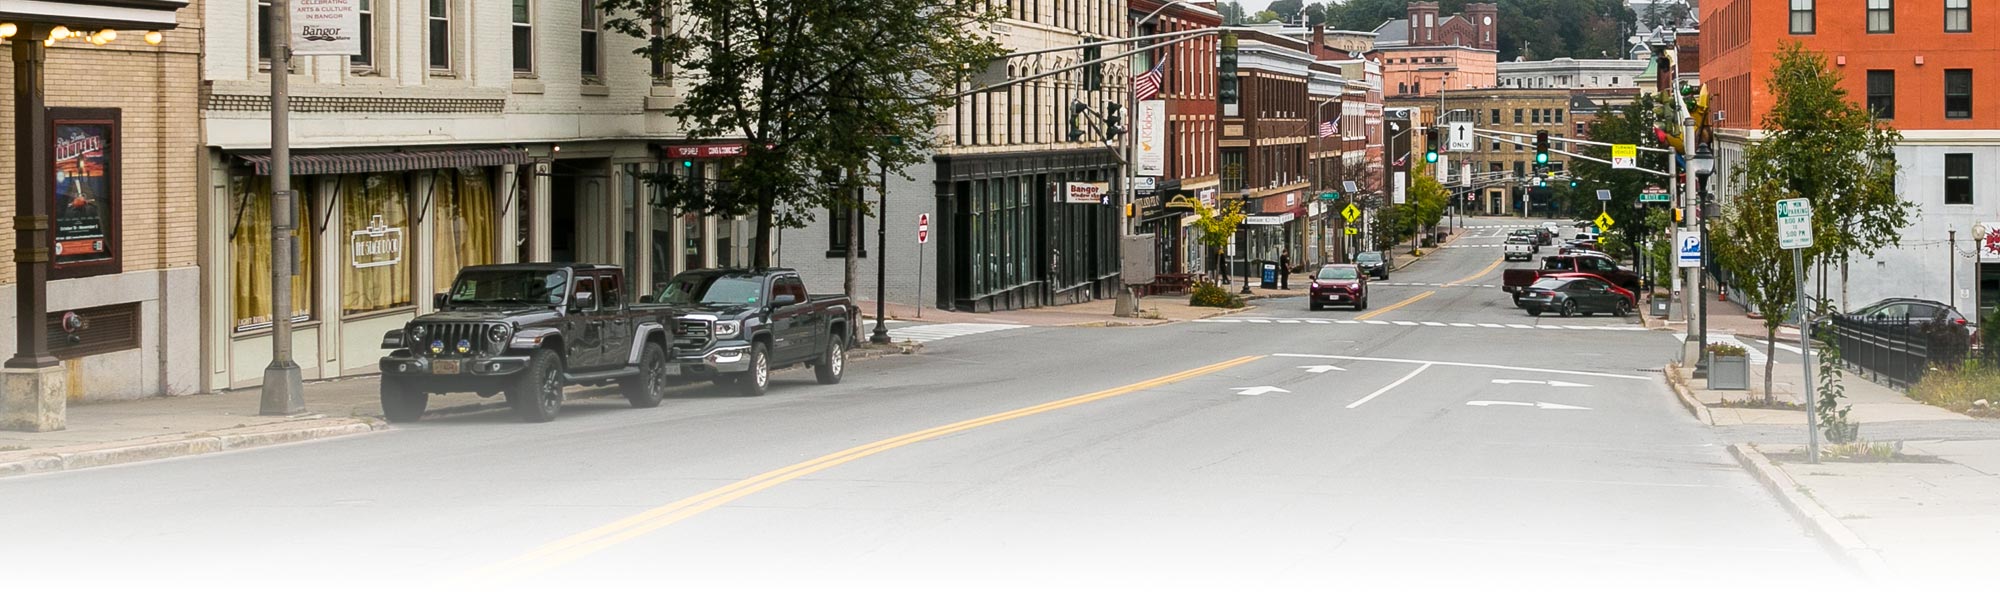 Photo of Main Street in Downtown Bangor, Maine